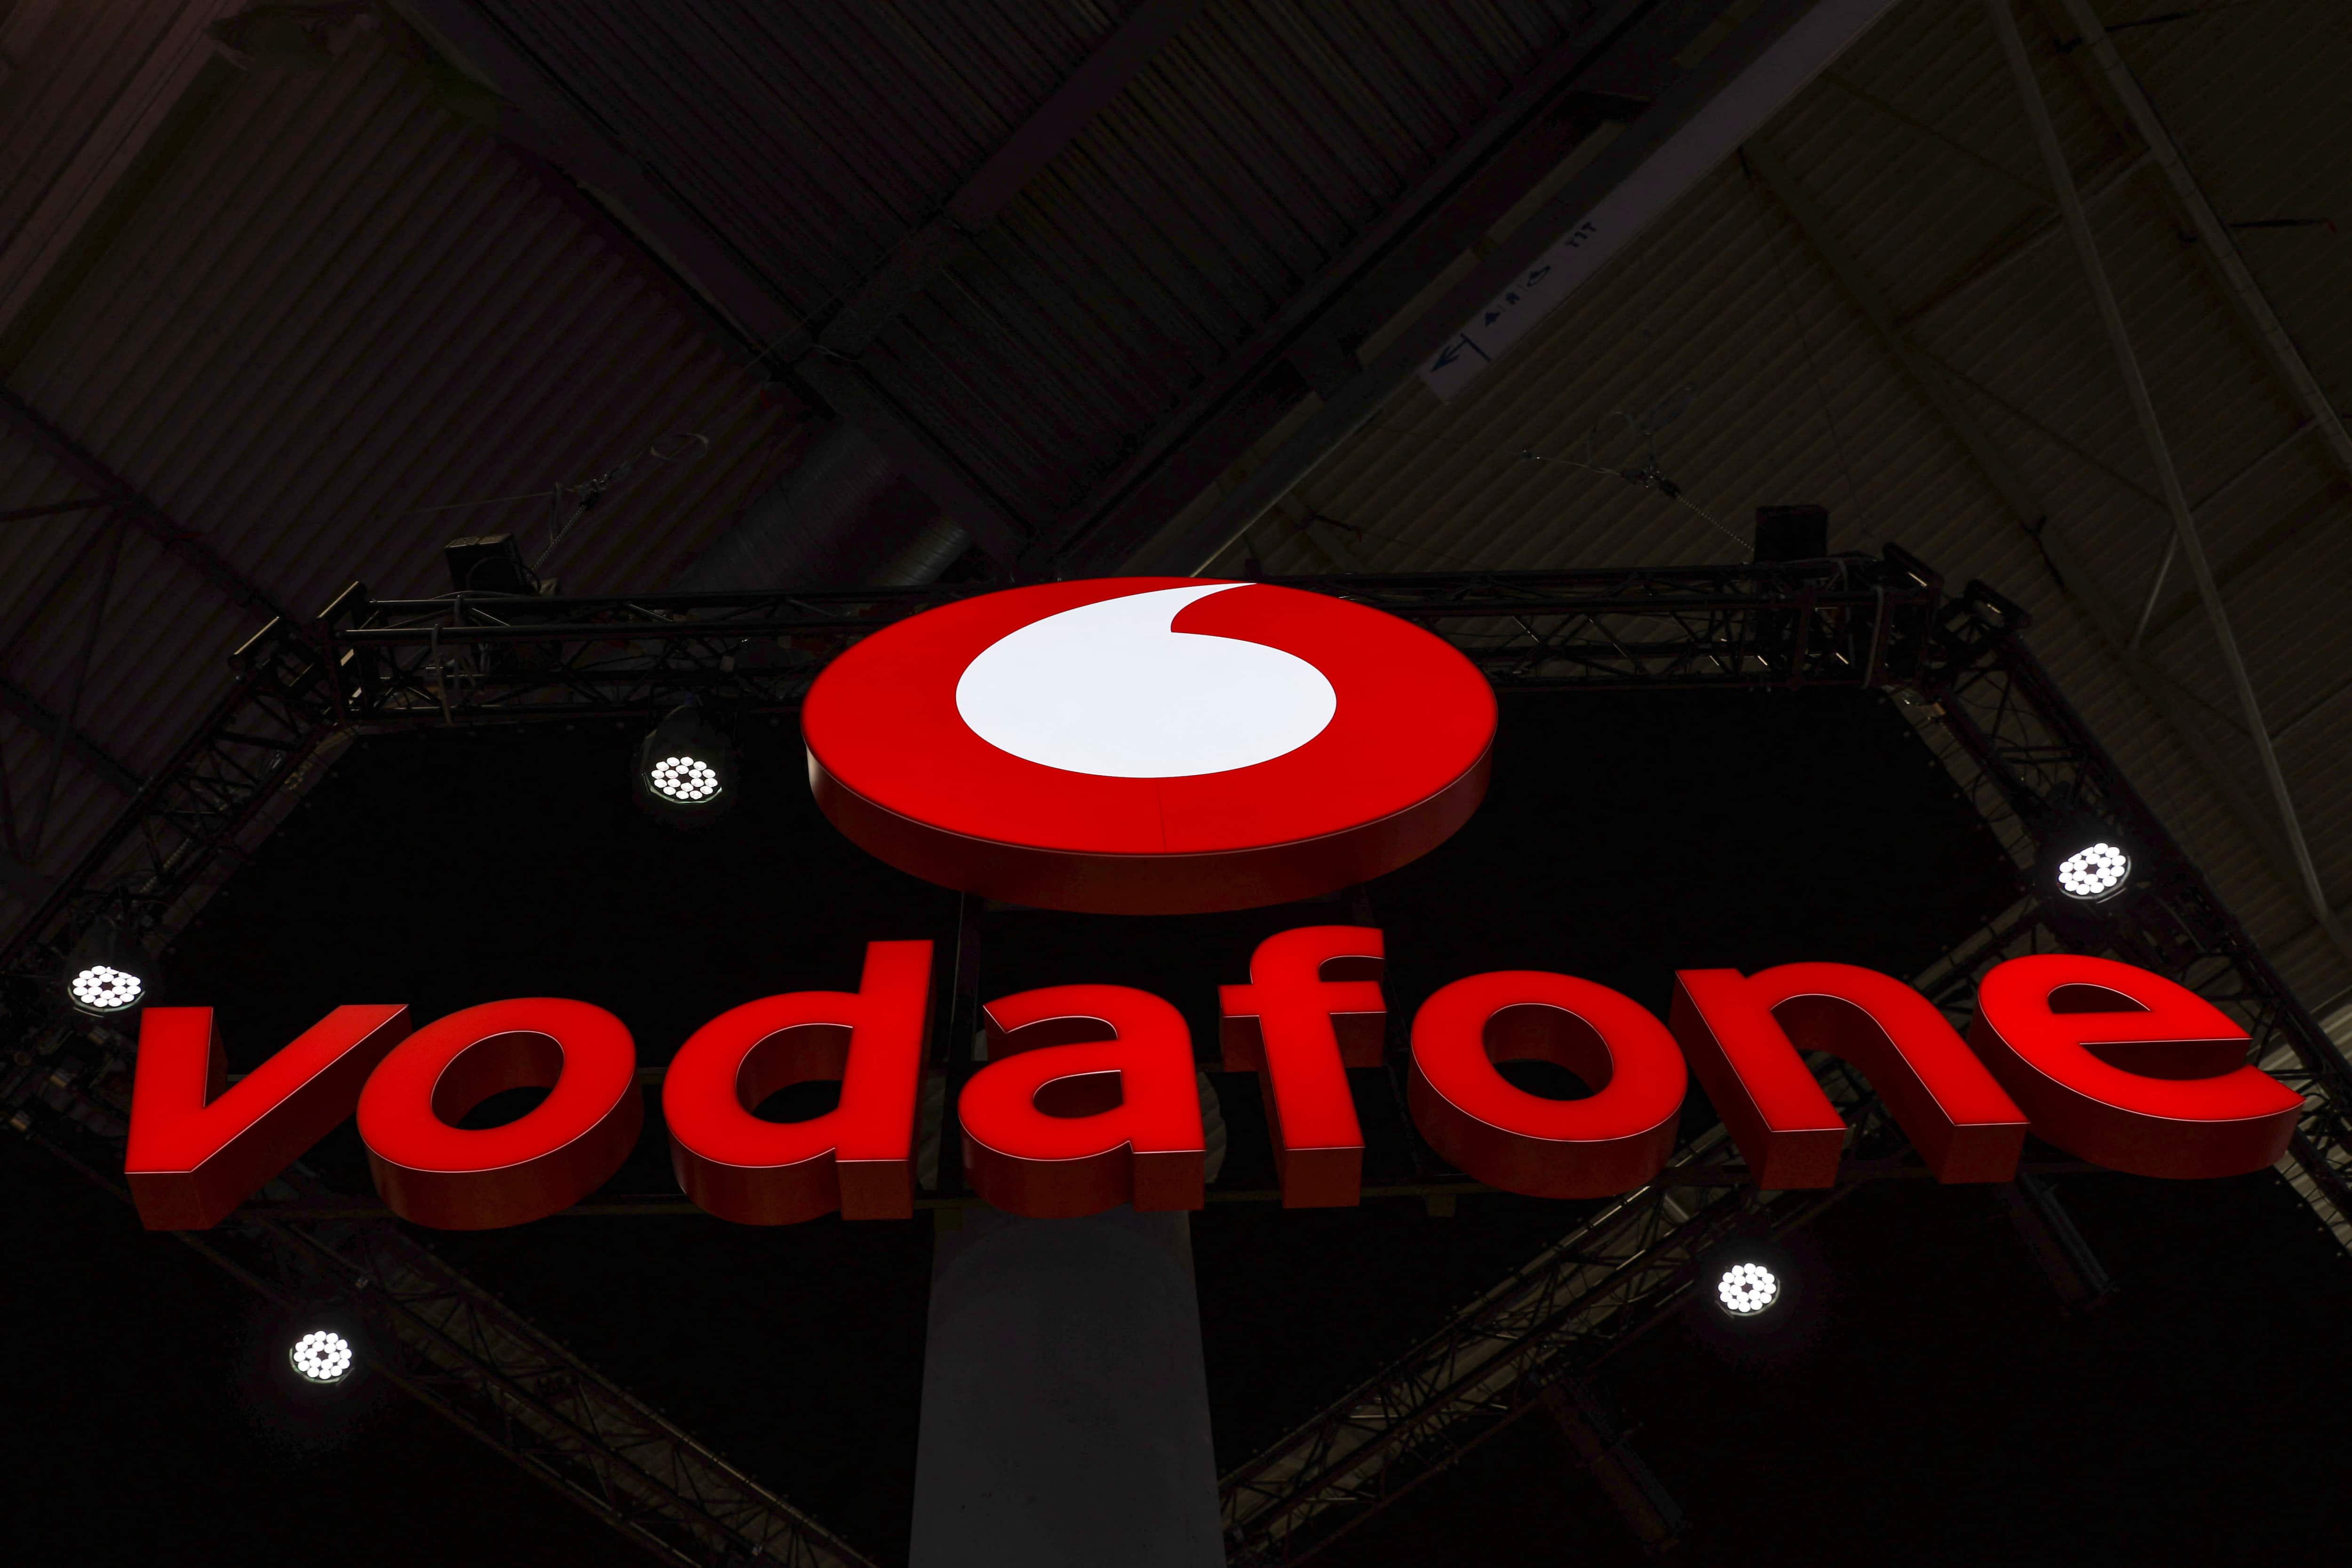 Coronavirus: Vodafone offers 30 days free mobile data - BBC News